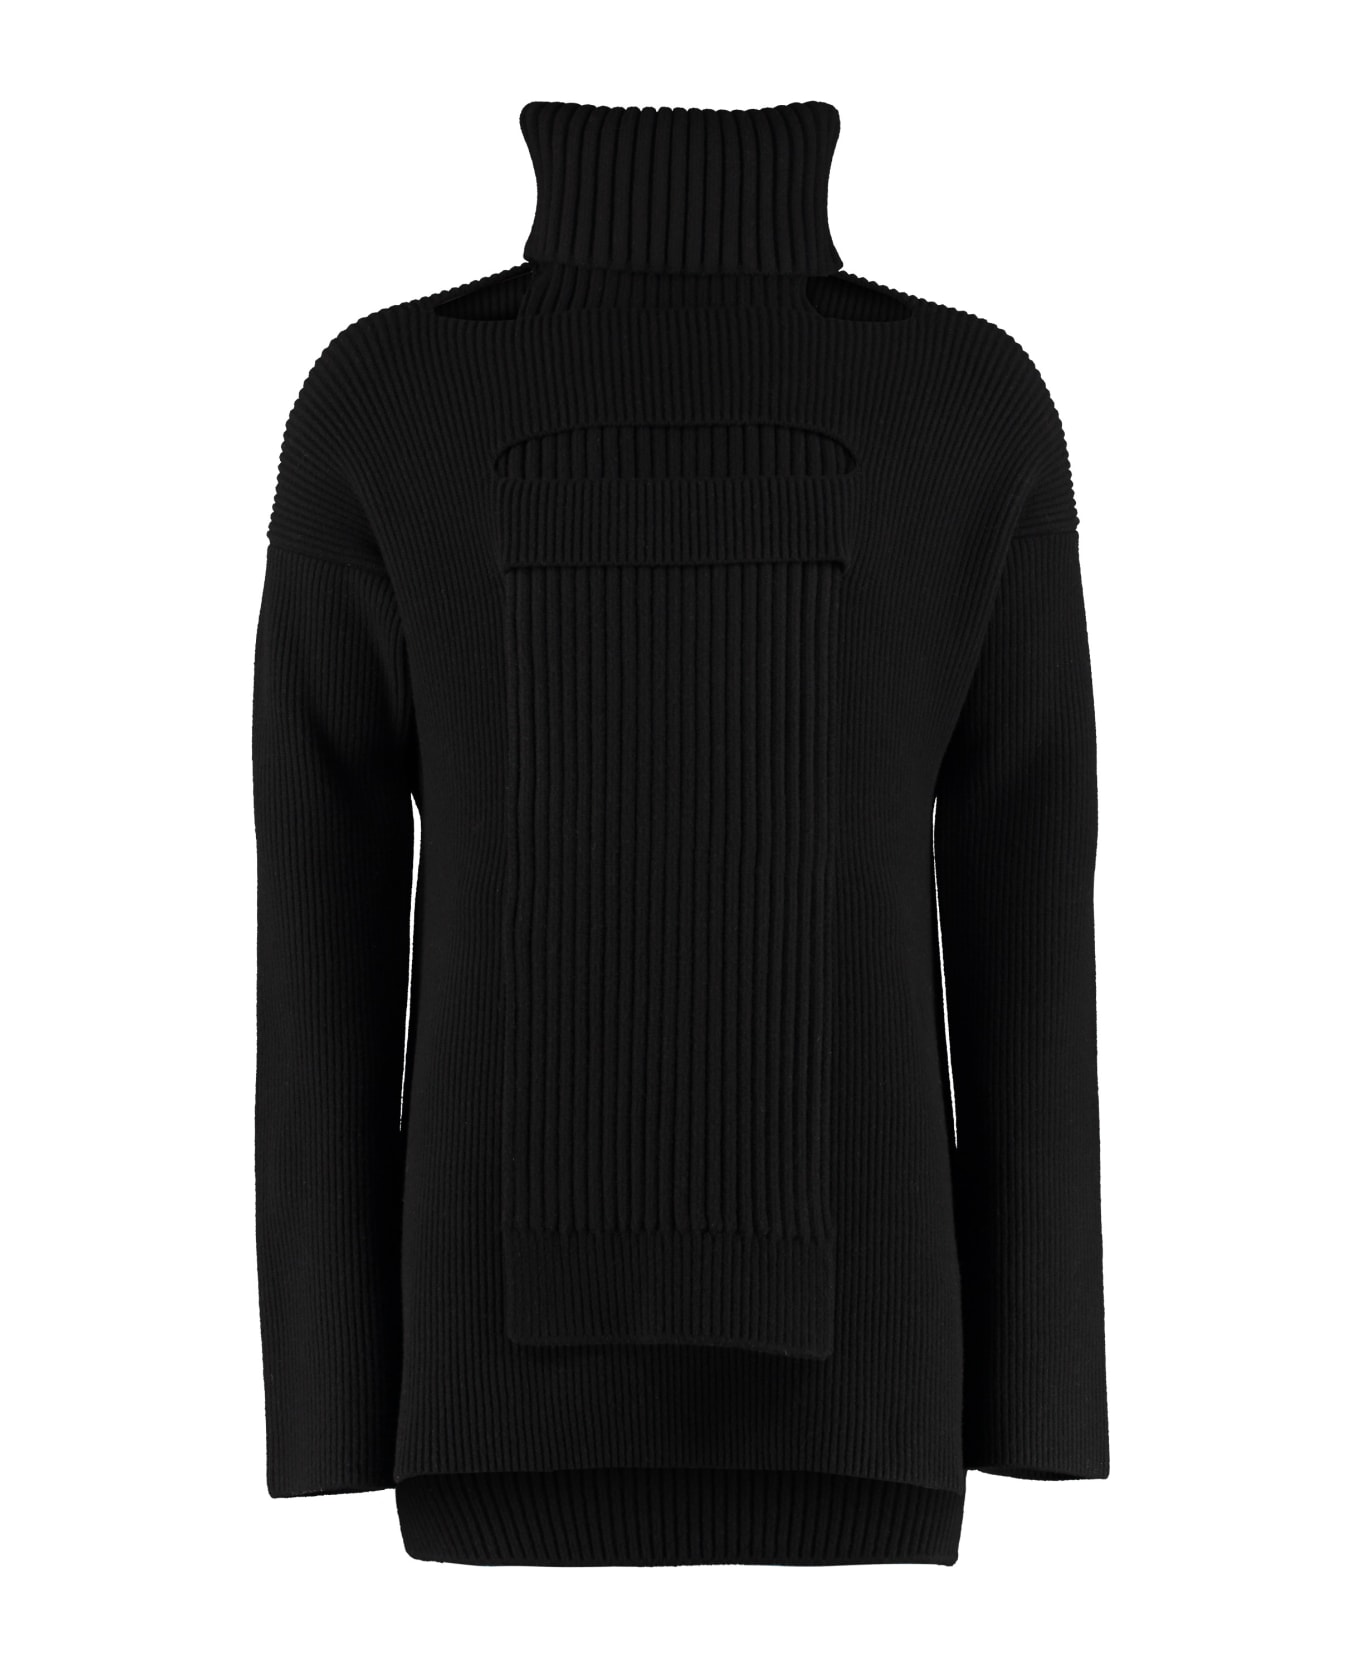 Bottega Veneta Wool Blend Sweater - black